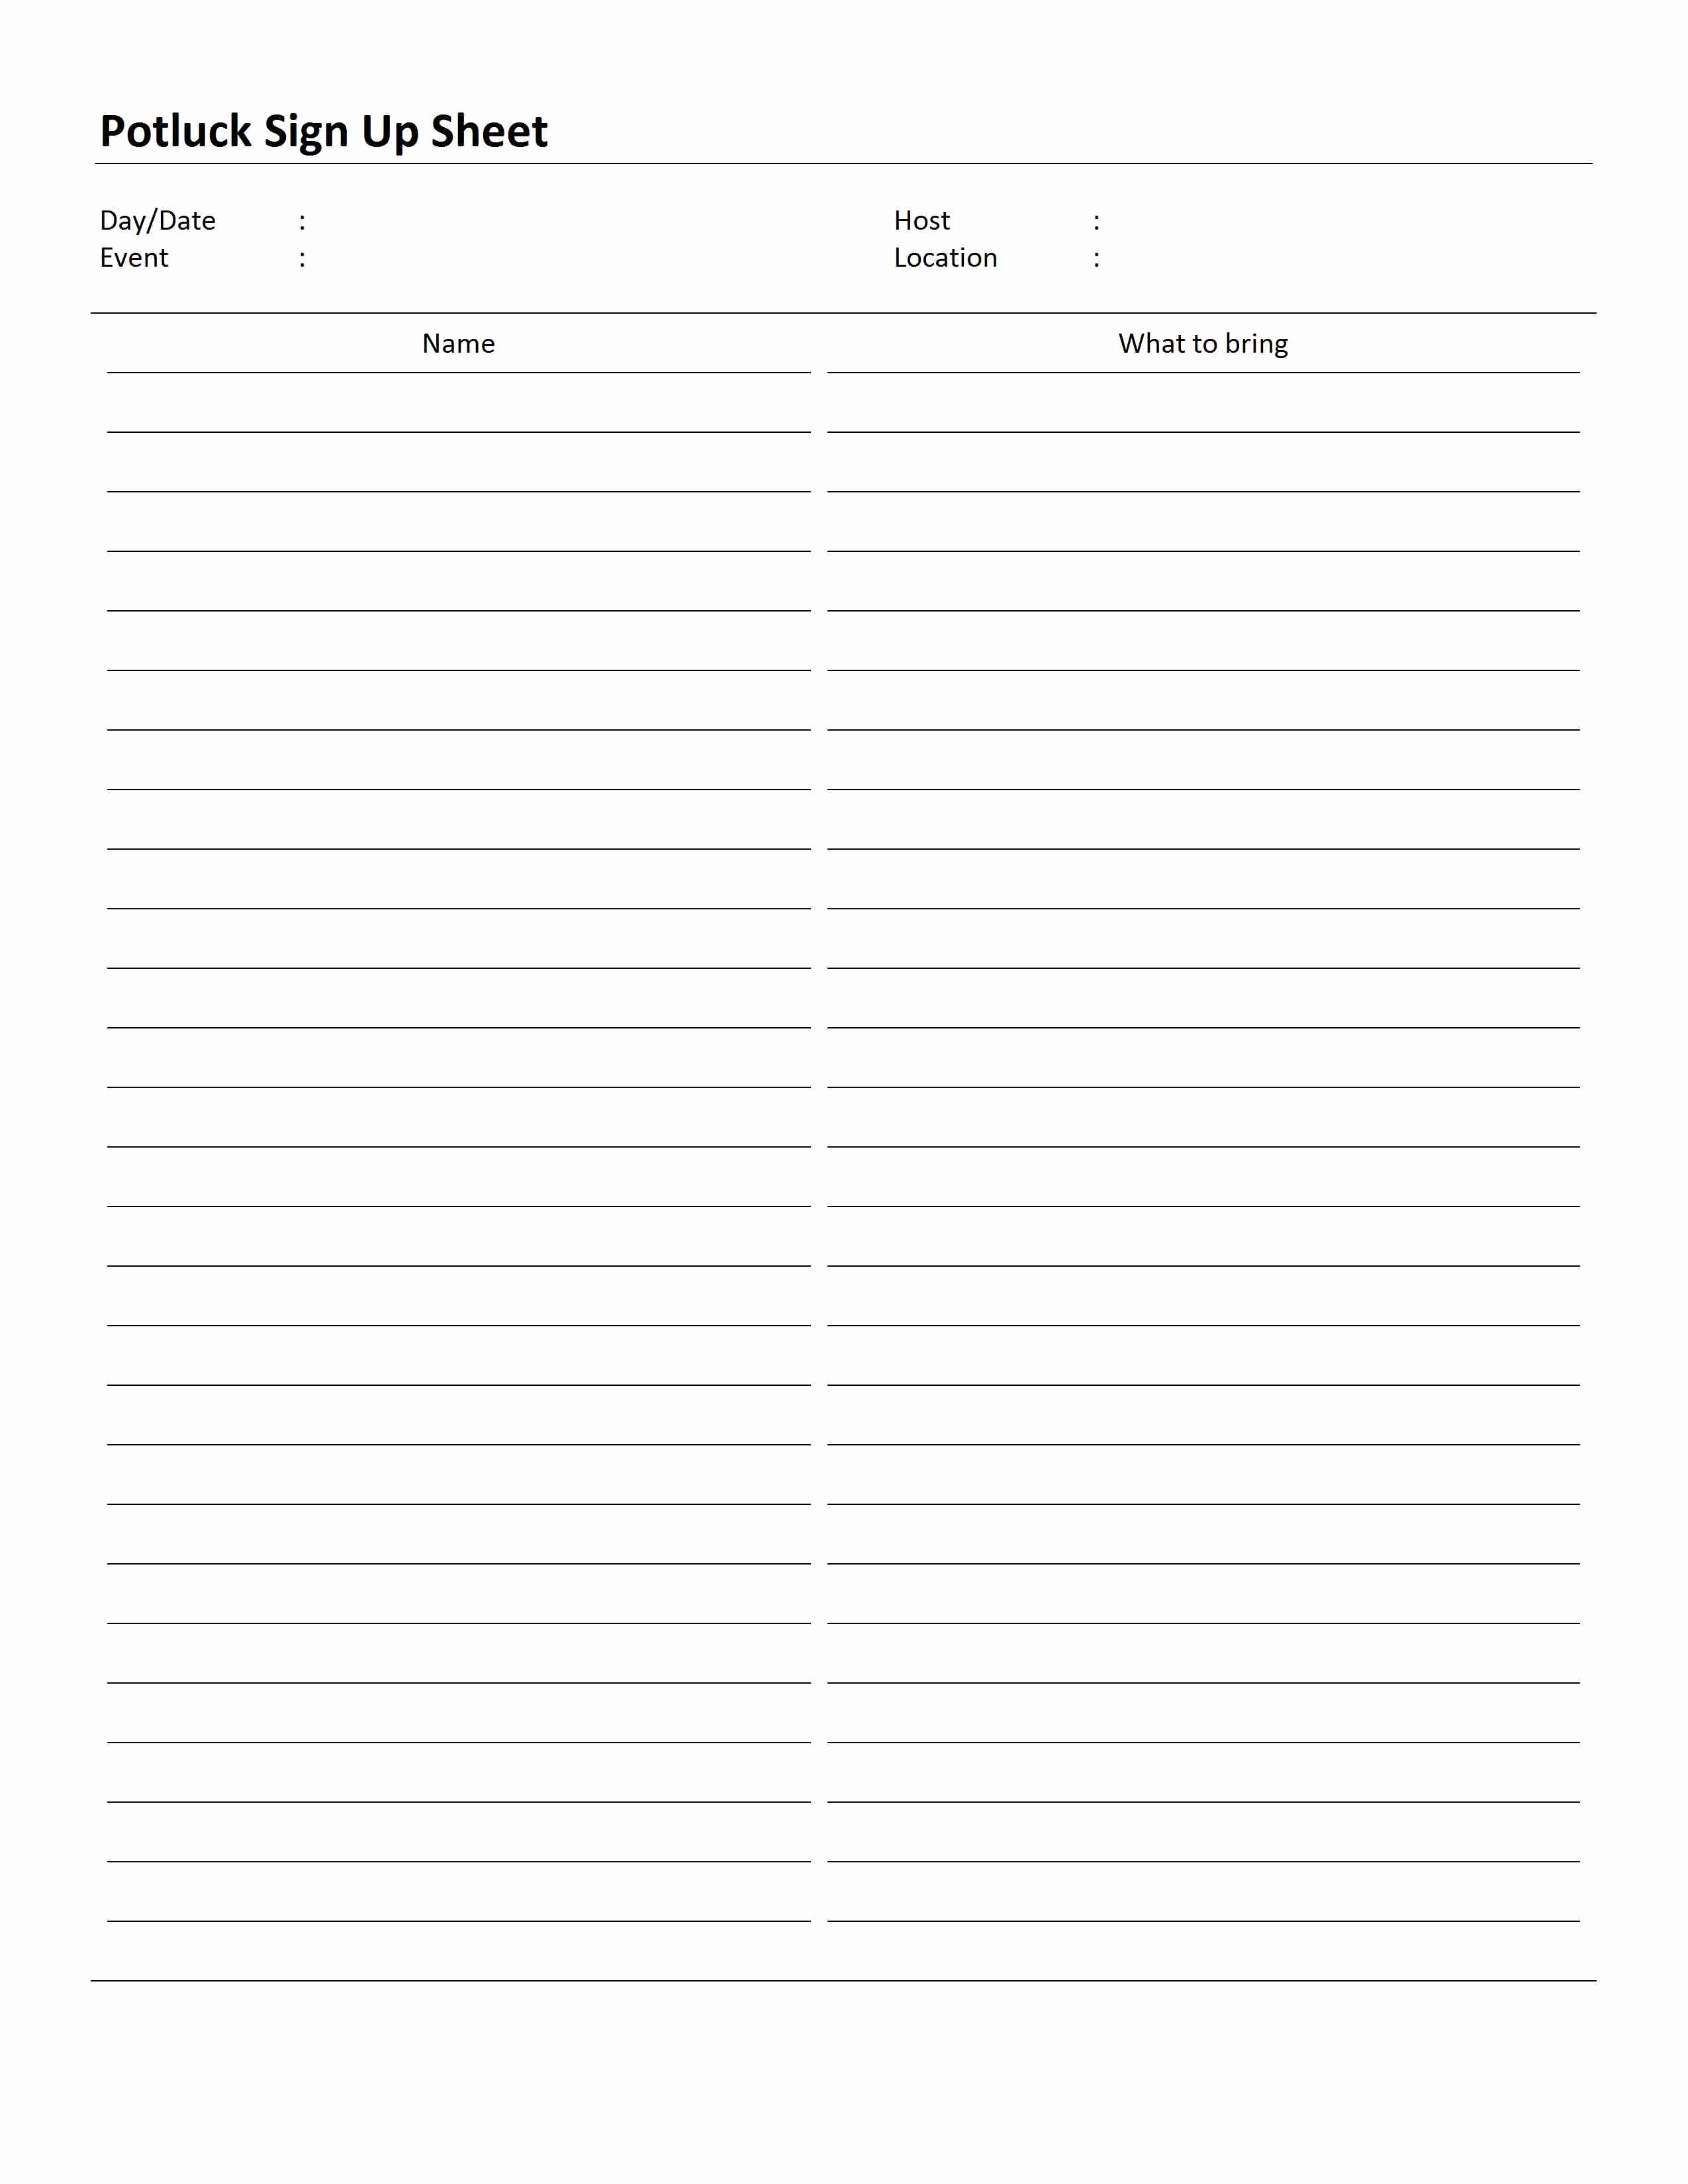 Sign Up Sheet Template Word Elegant Potluck Sign Up Sheet